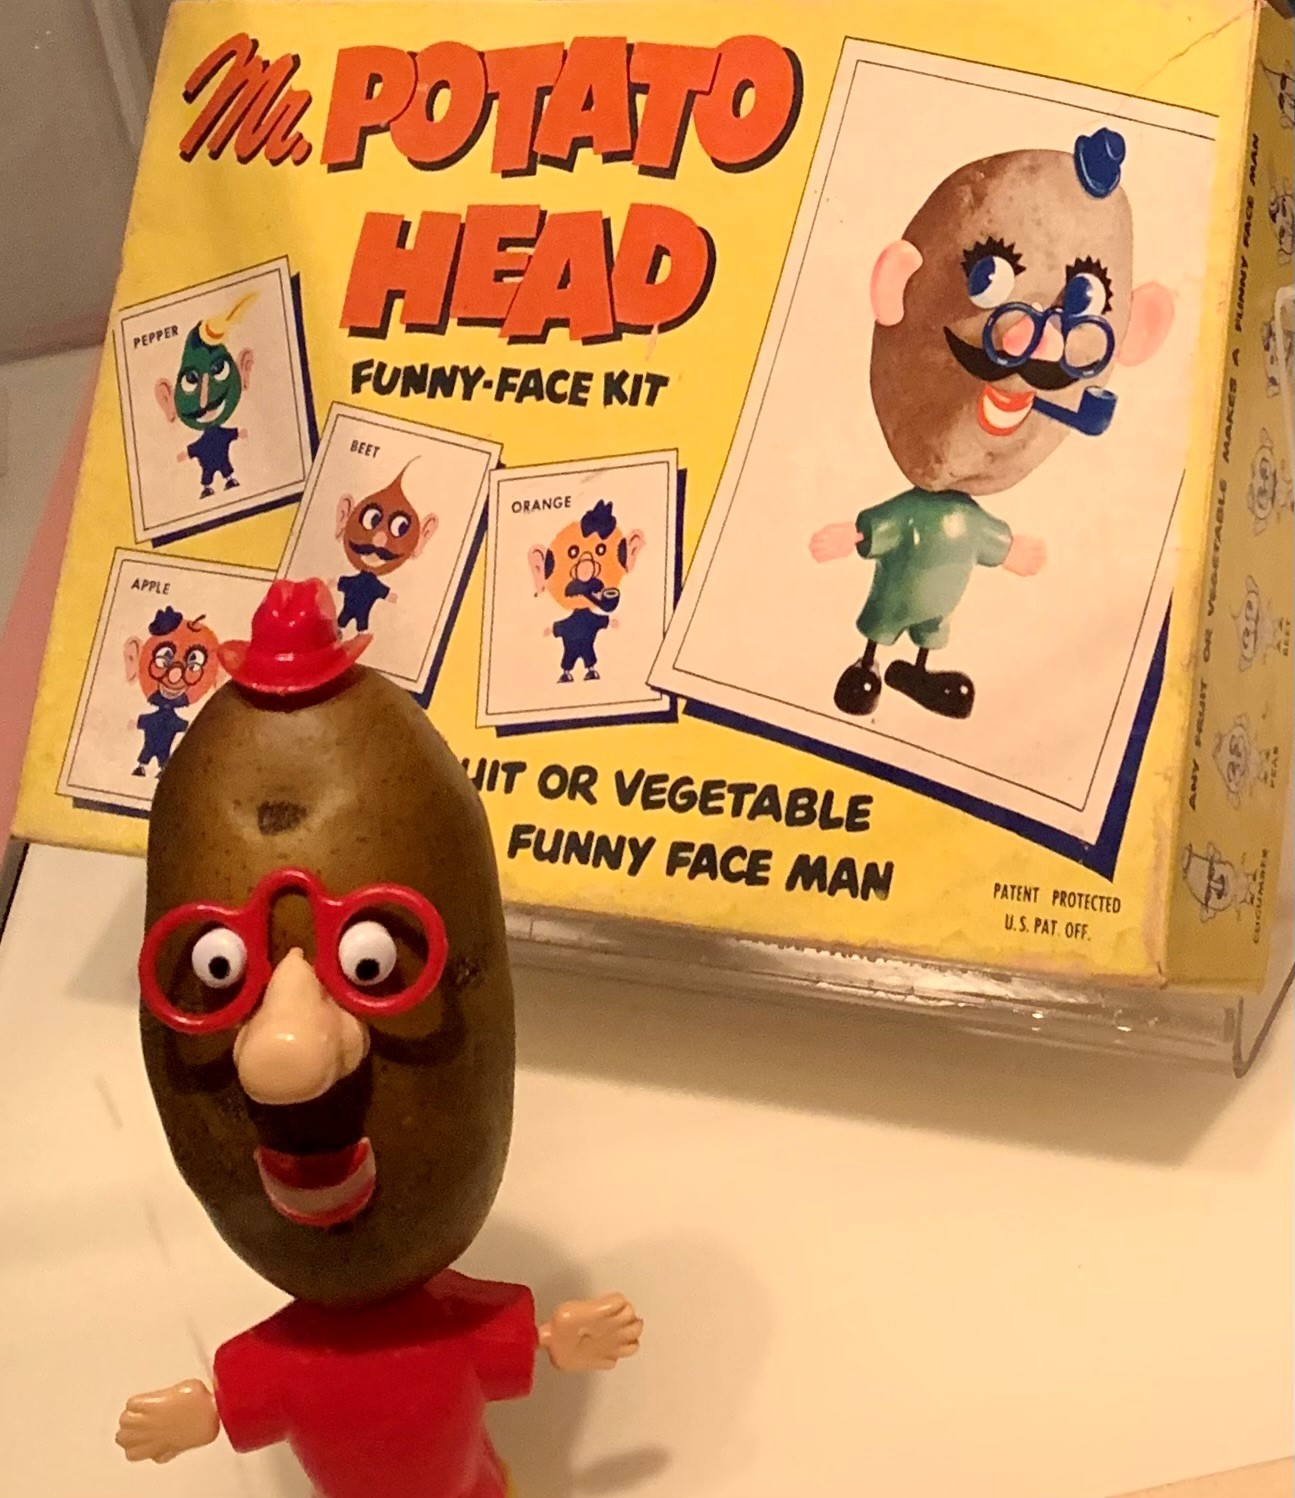 Mr. Potato Head Birthday and How We Use Body Parts